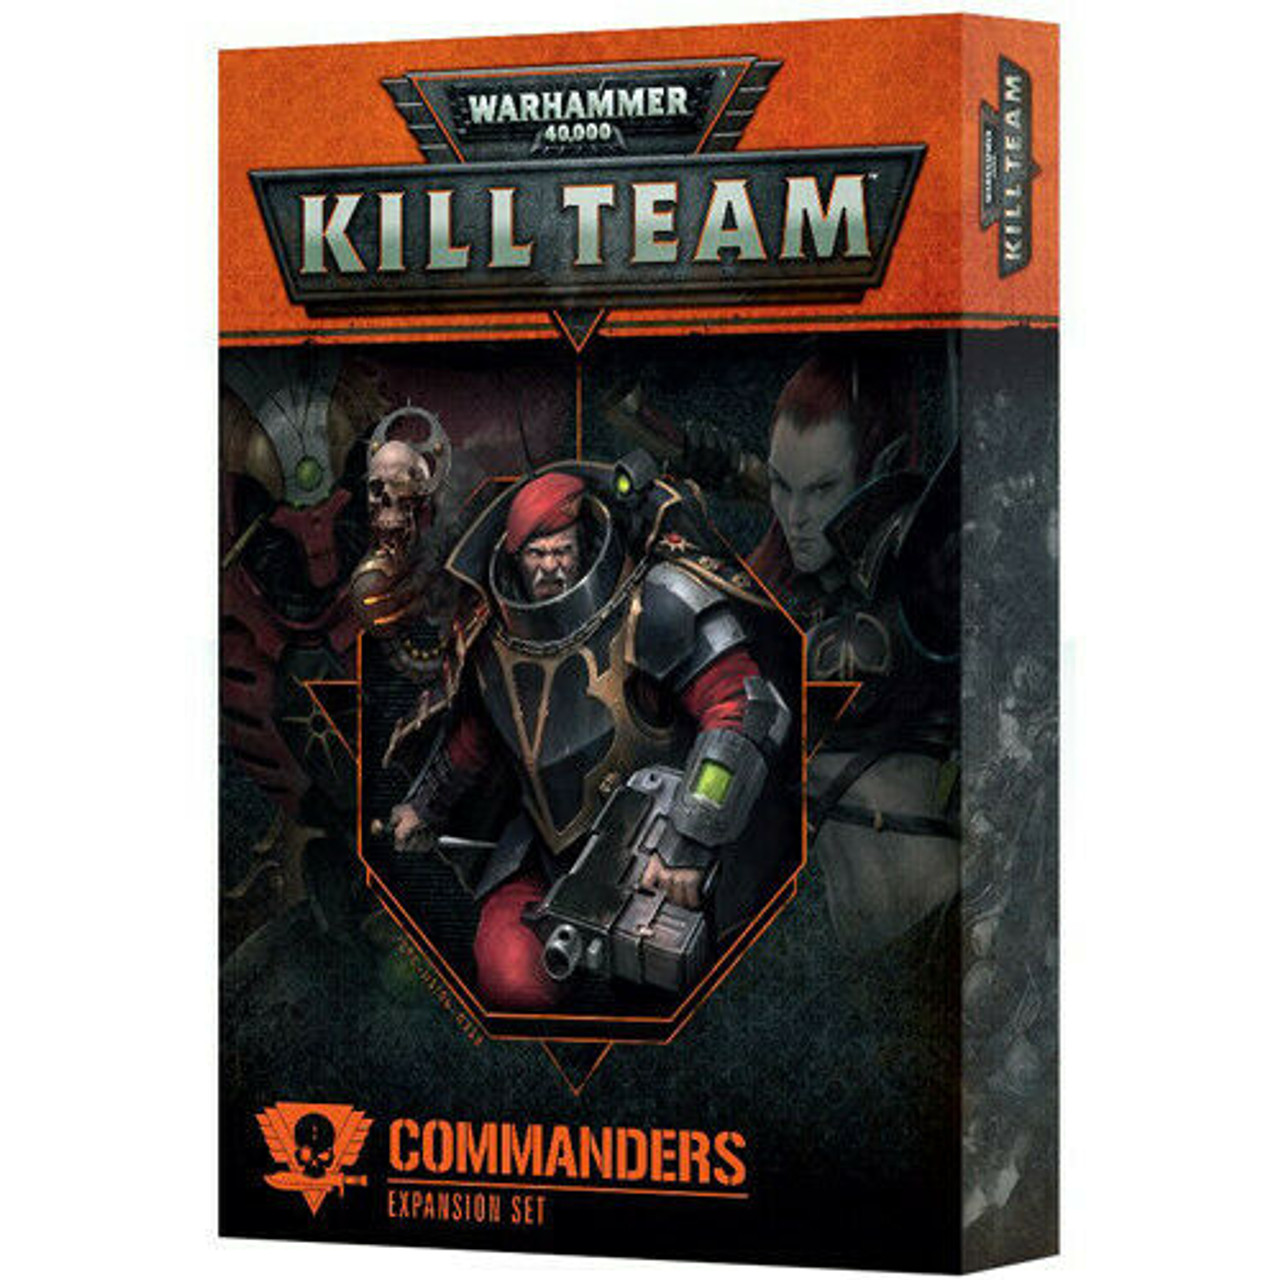 Warhammer 40K: Kill Team - Commanders Expansion Set -=NEW=-